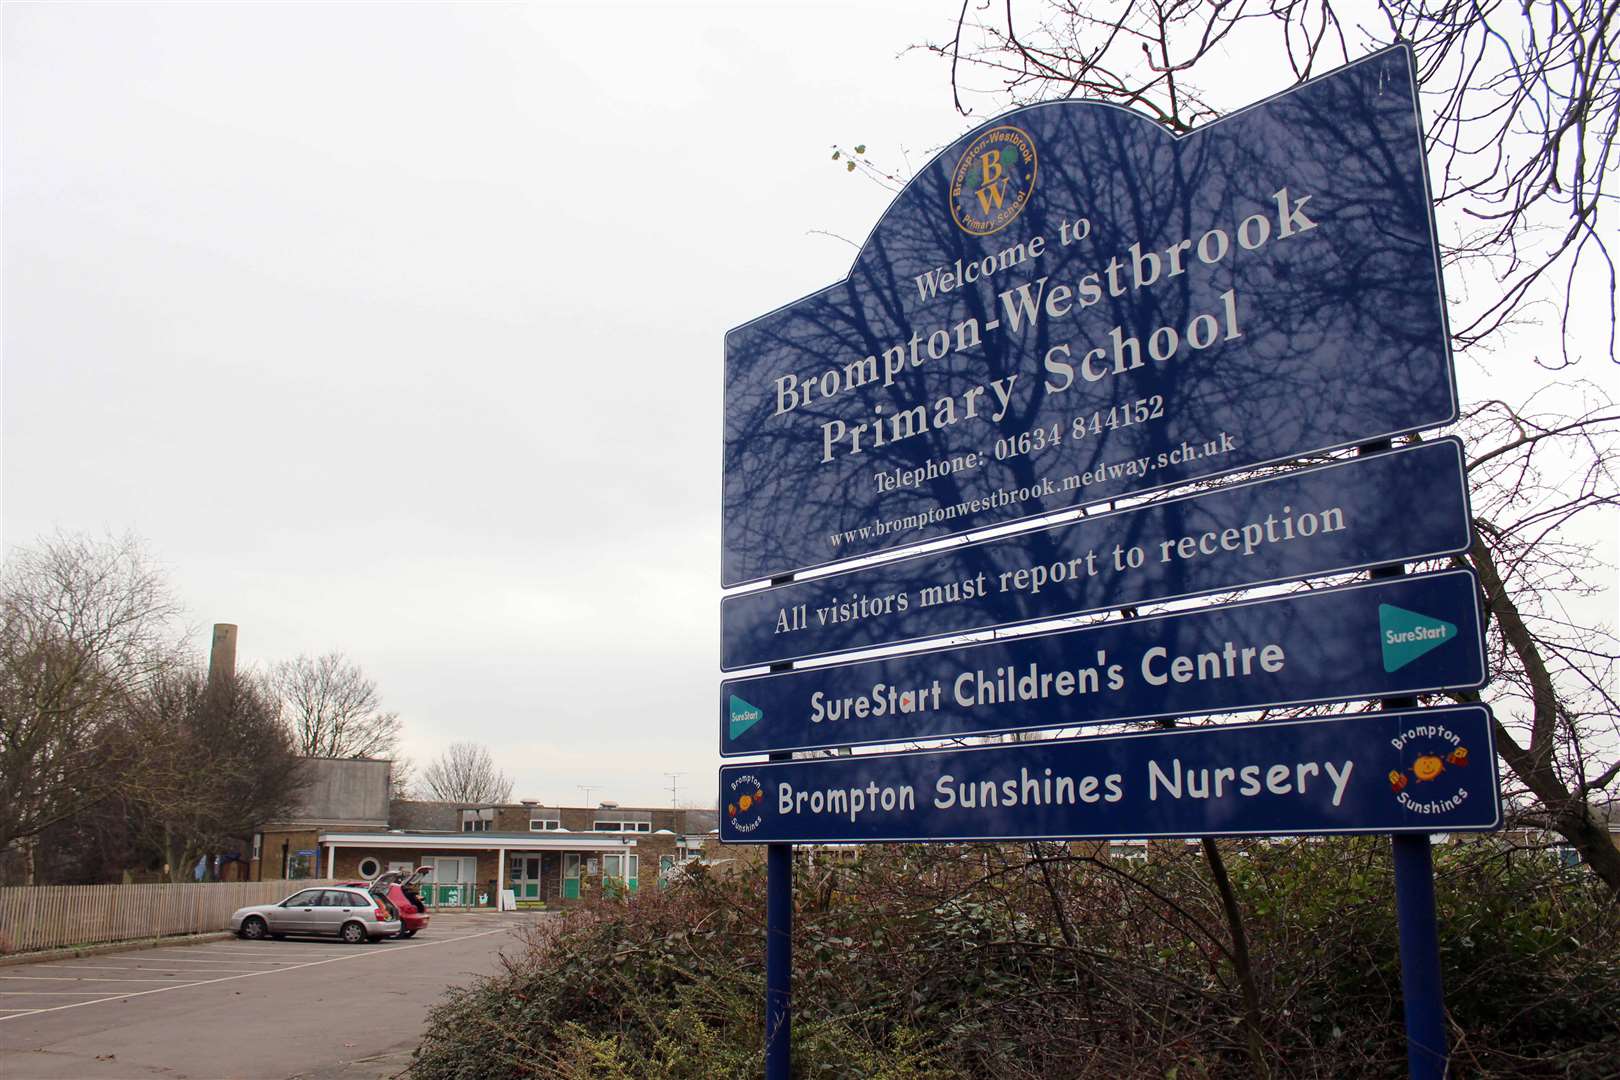 Brompton Westbrook Primary School.